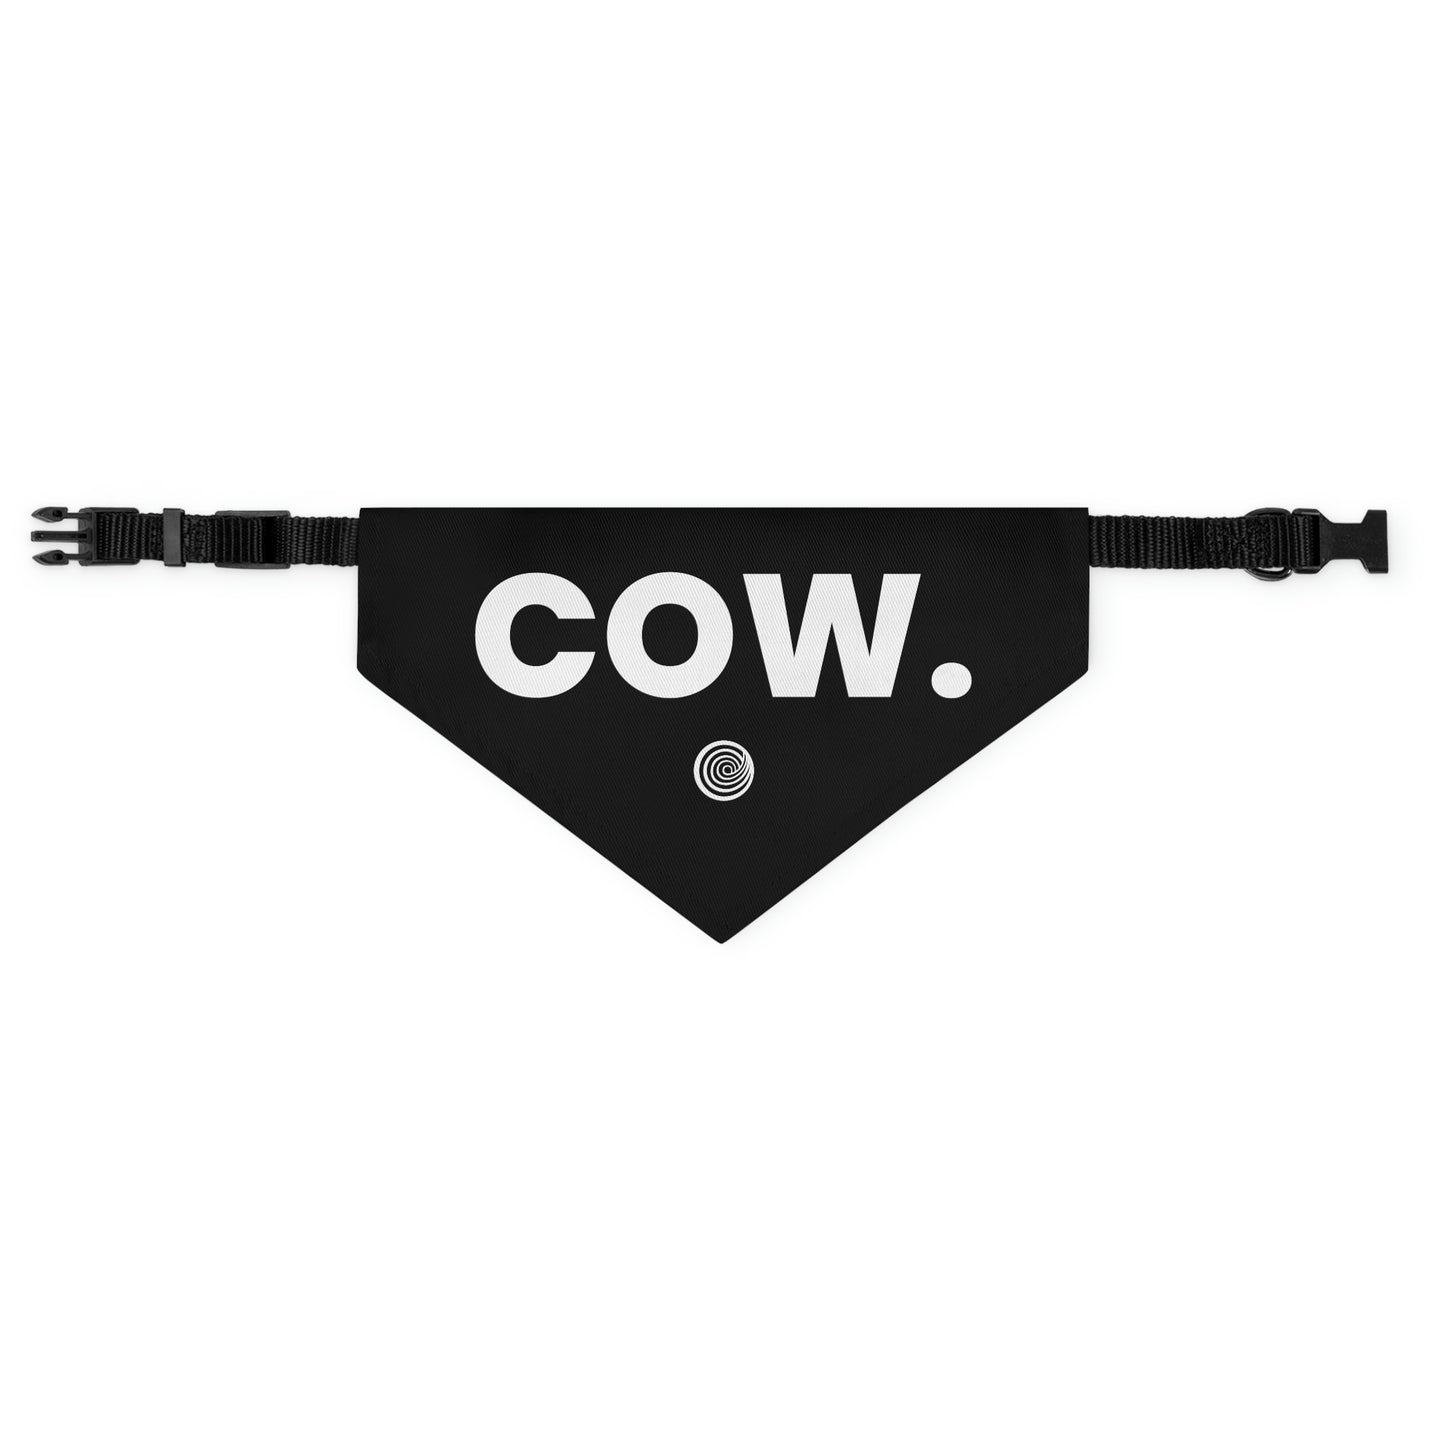 Limited Edition "Cow." Bandana